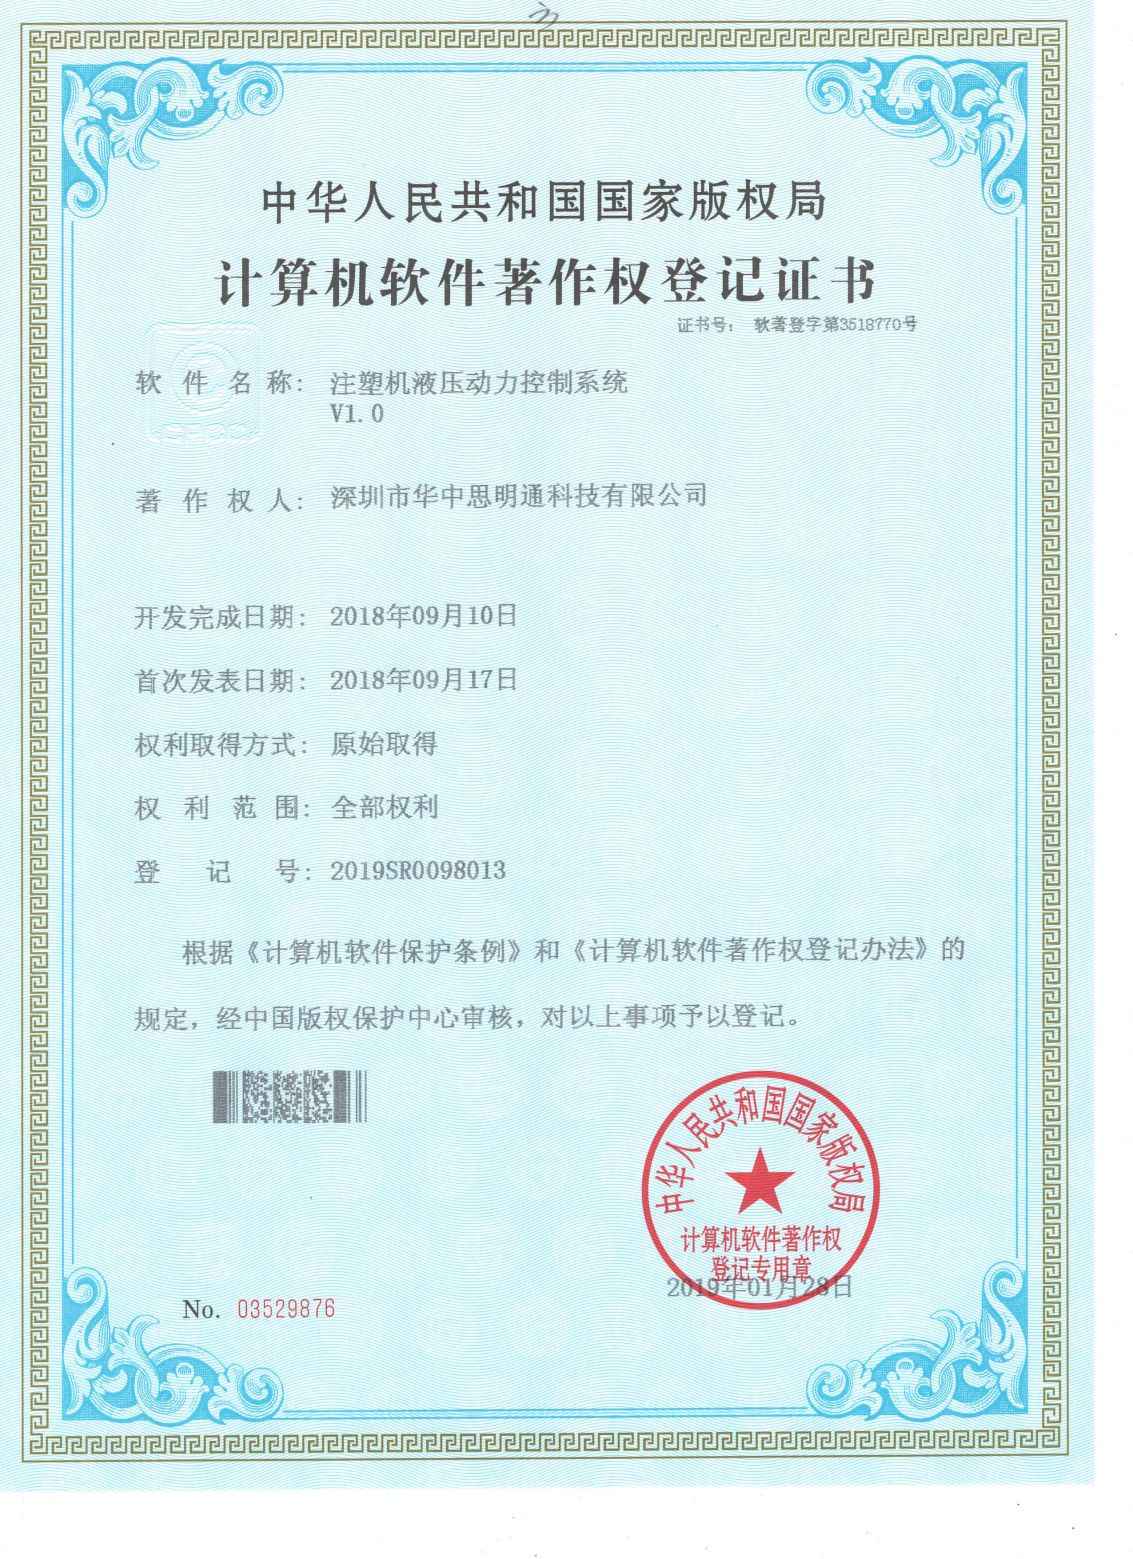 Software copyright registration certificate-01